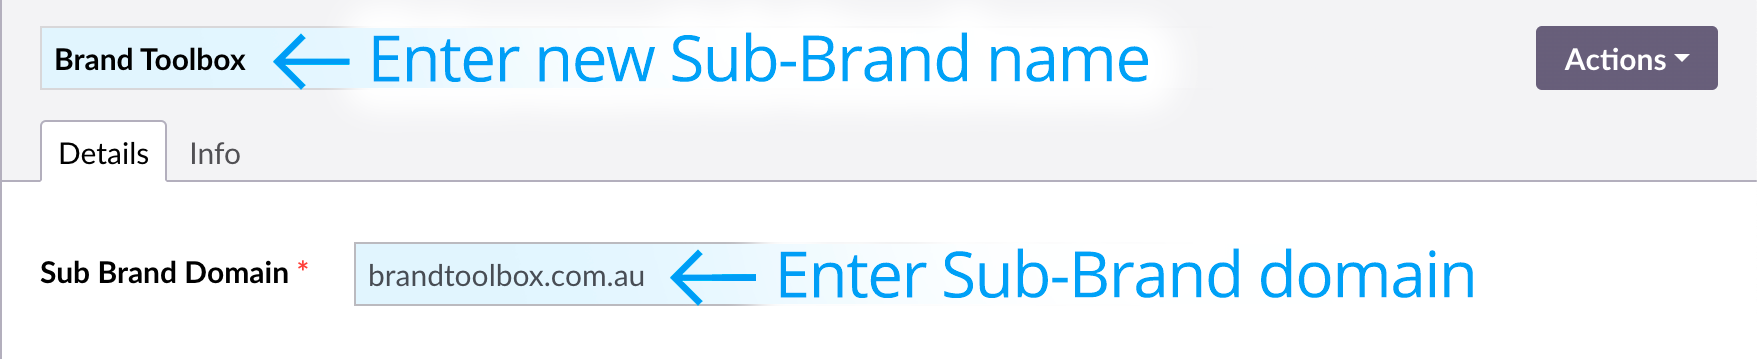 Branding node - Enter sub brand details